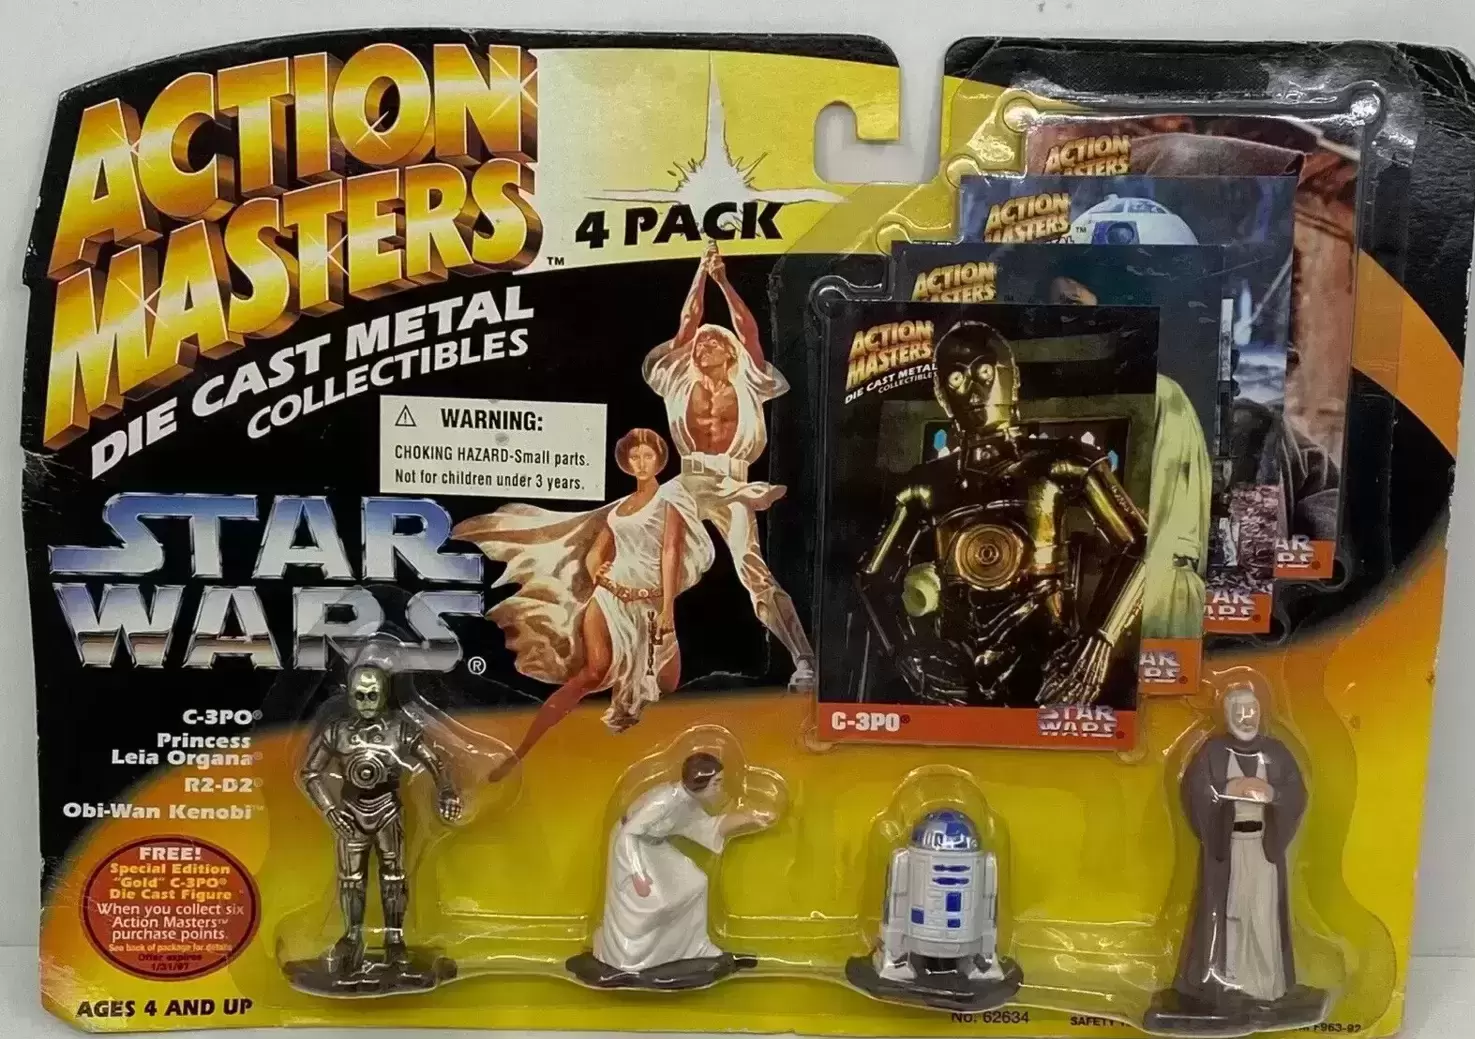 Action Masters - Die Cast Metal Collectibles - Star Wars - C-3PO, Princess Leia Organa, R2-D2 & Obi-Wan Kenobi 4 Pack